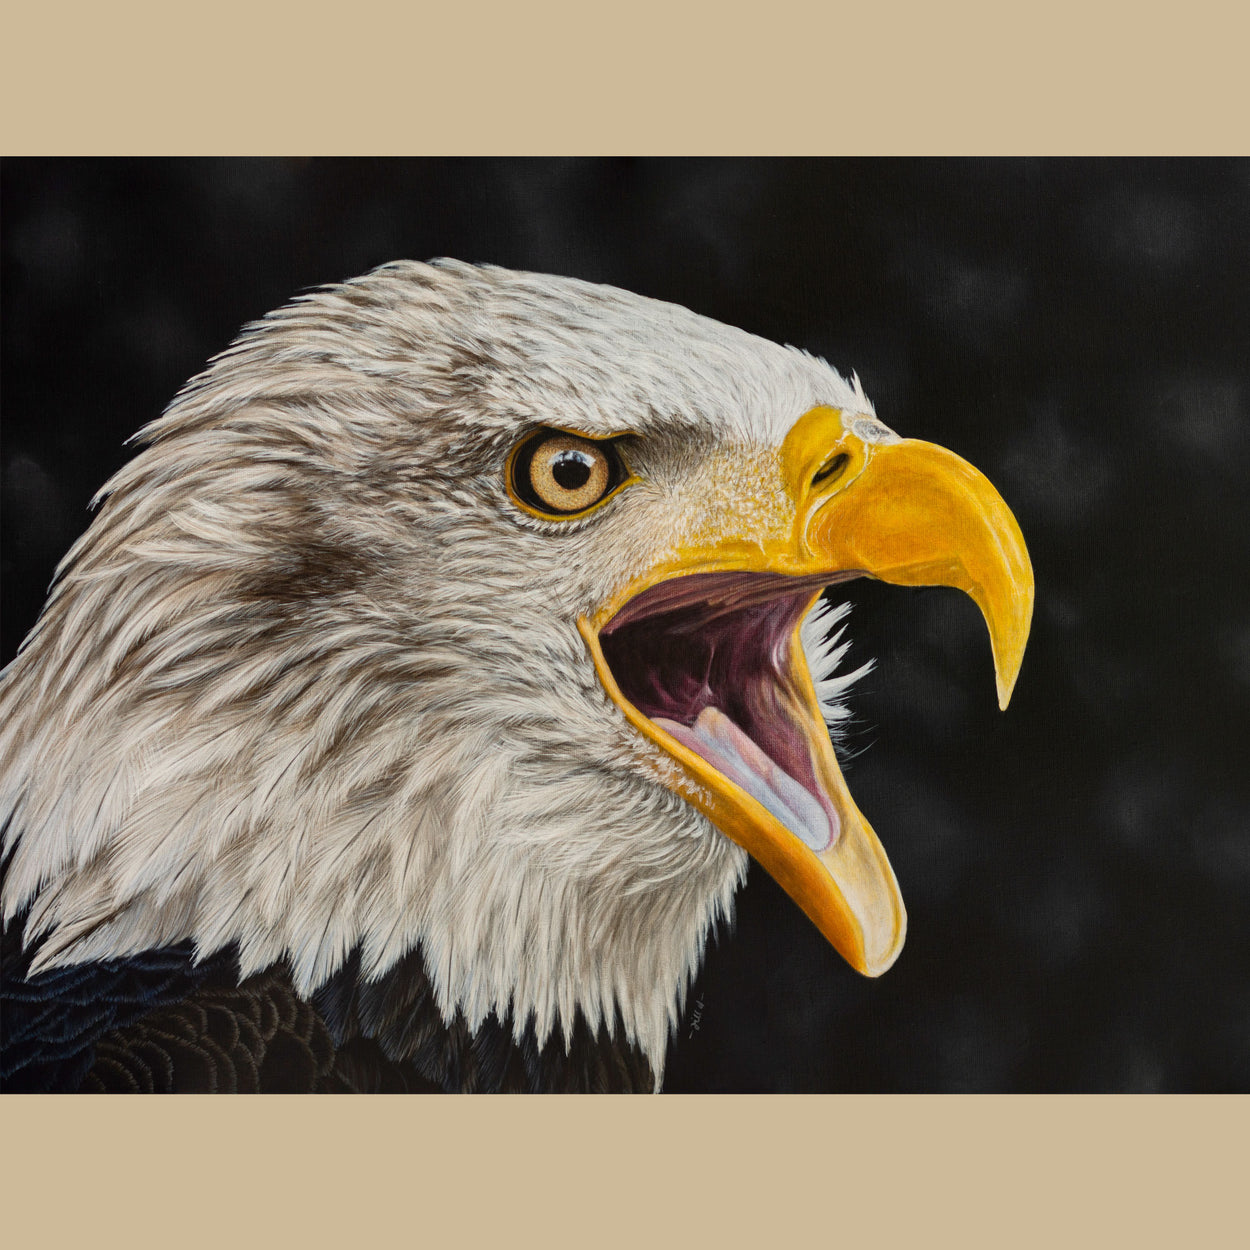 Bald eagle painting art print by Jill Dimond